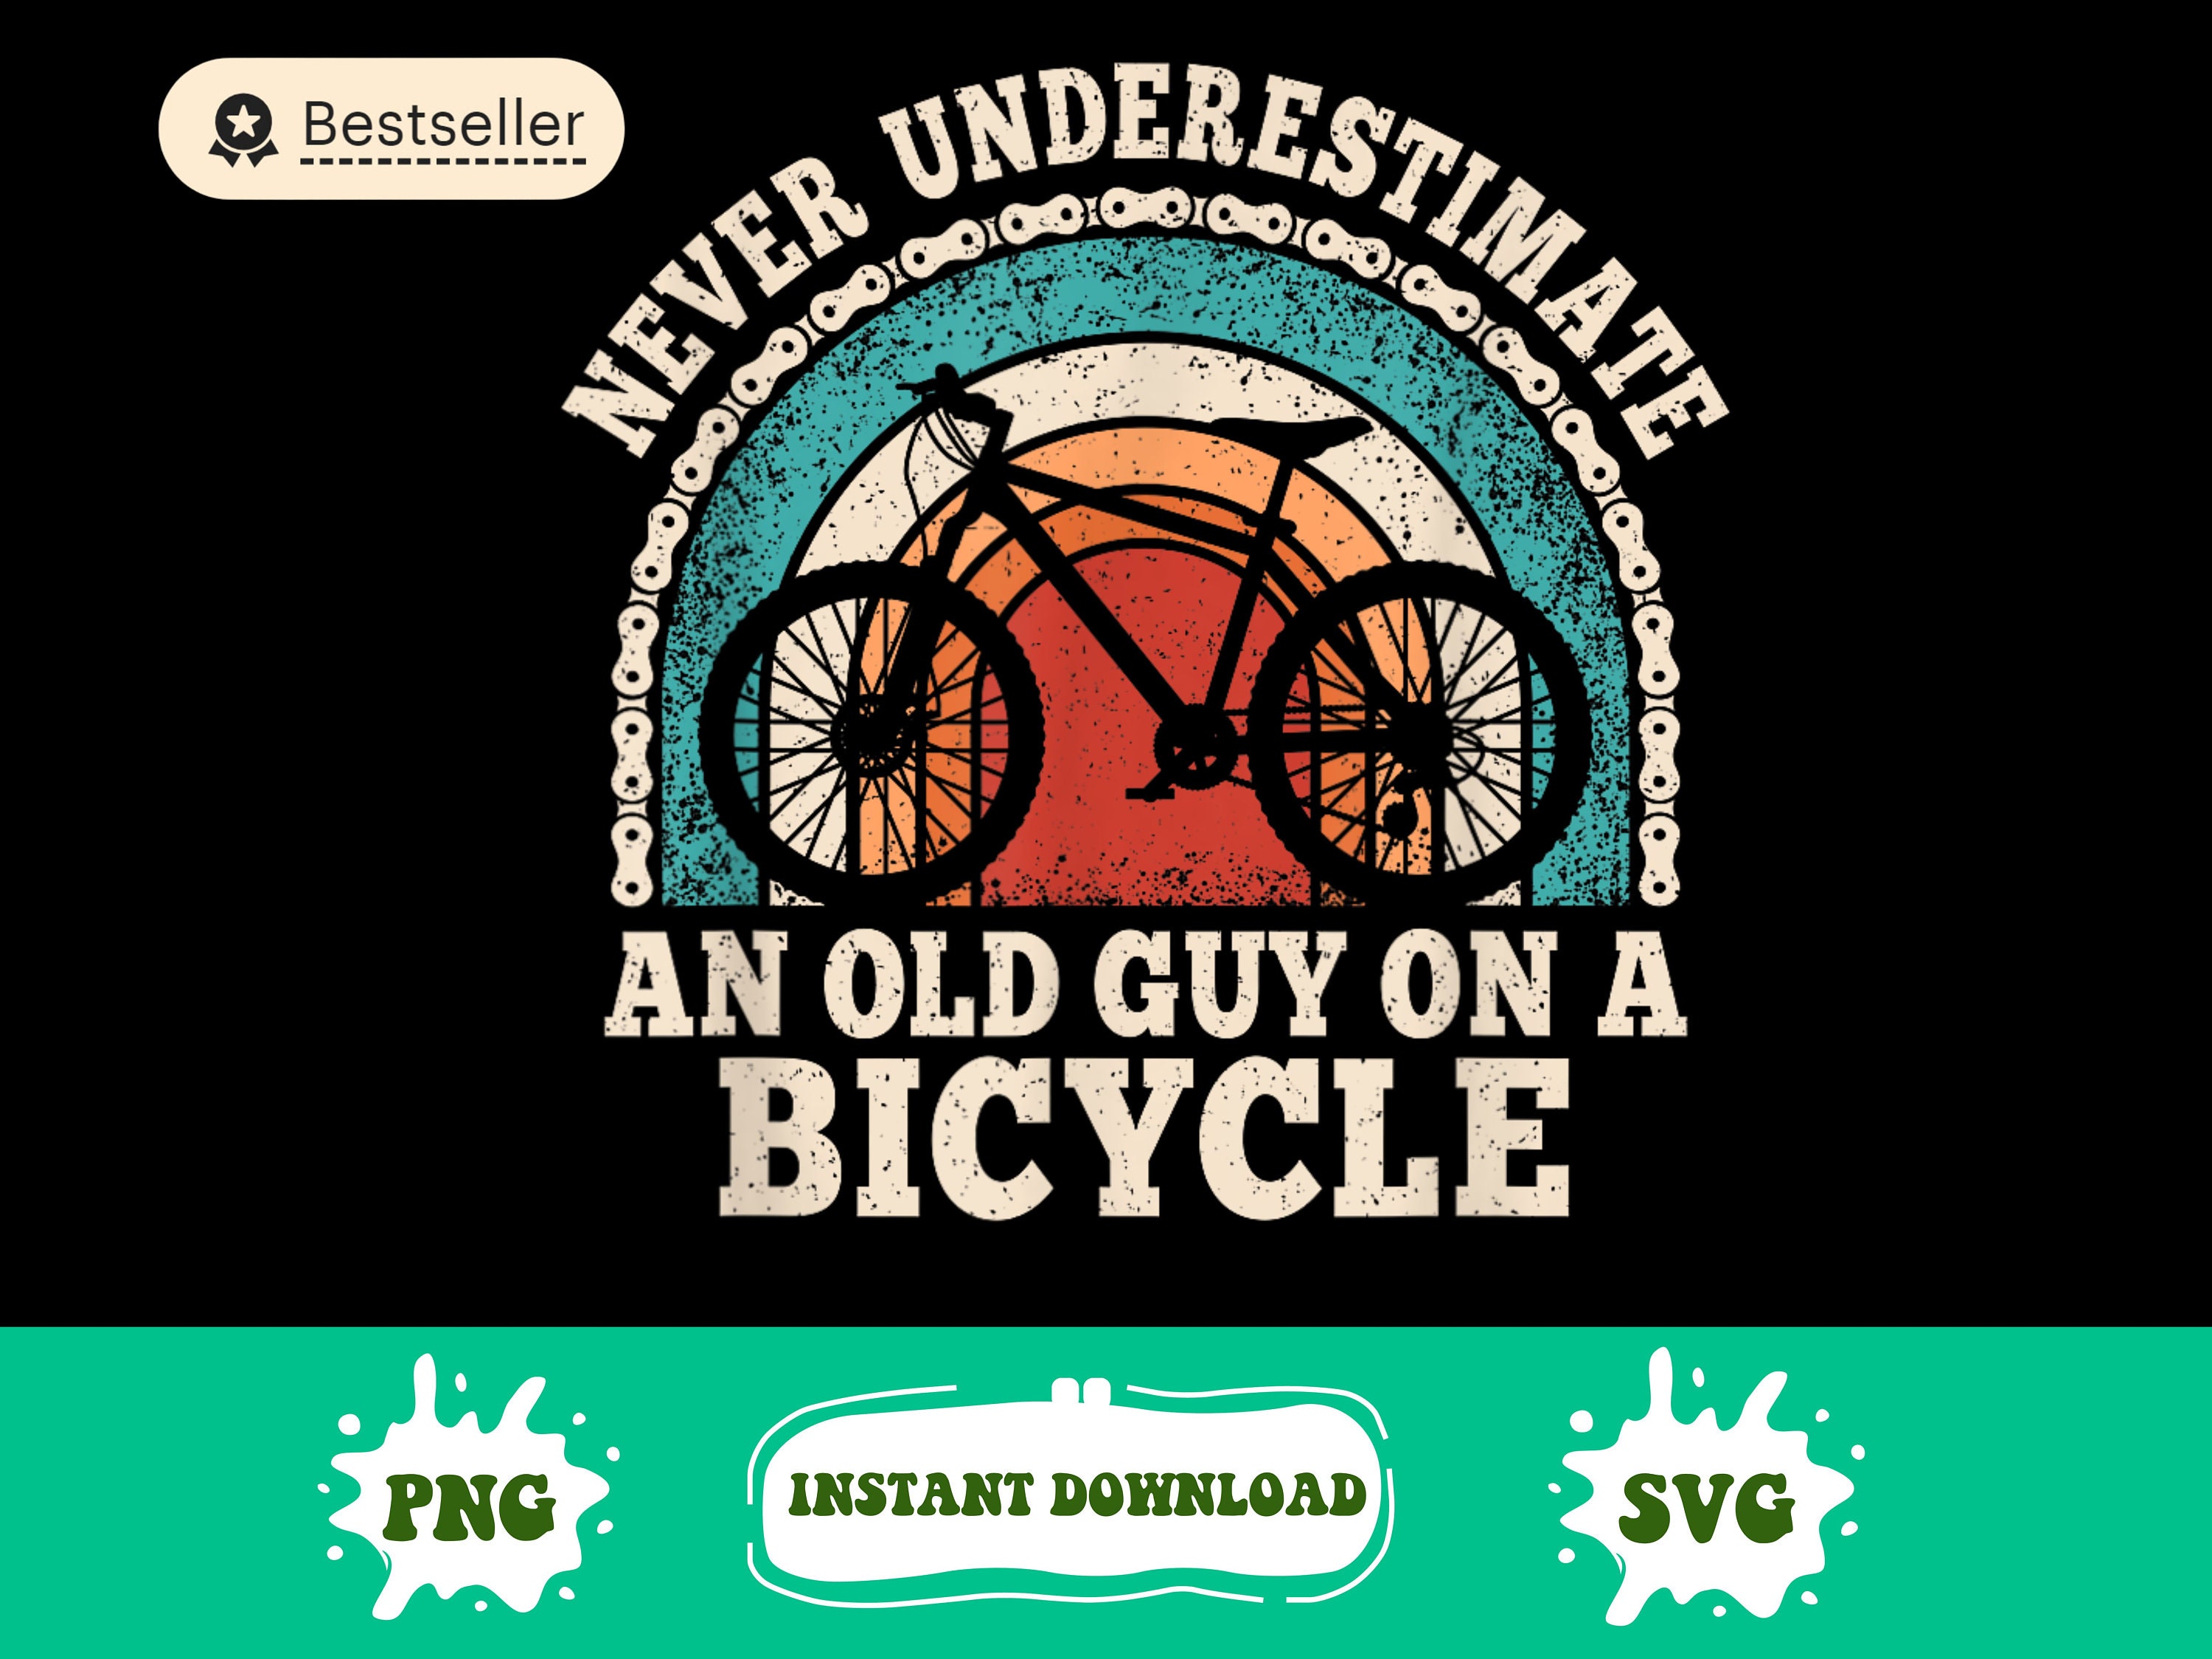 Mens Never Underestimate An Old Man On A Bike Grandpa Ringneck Tumbler